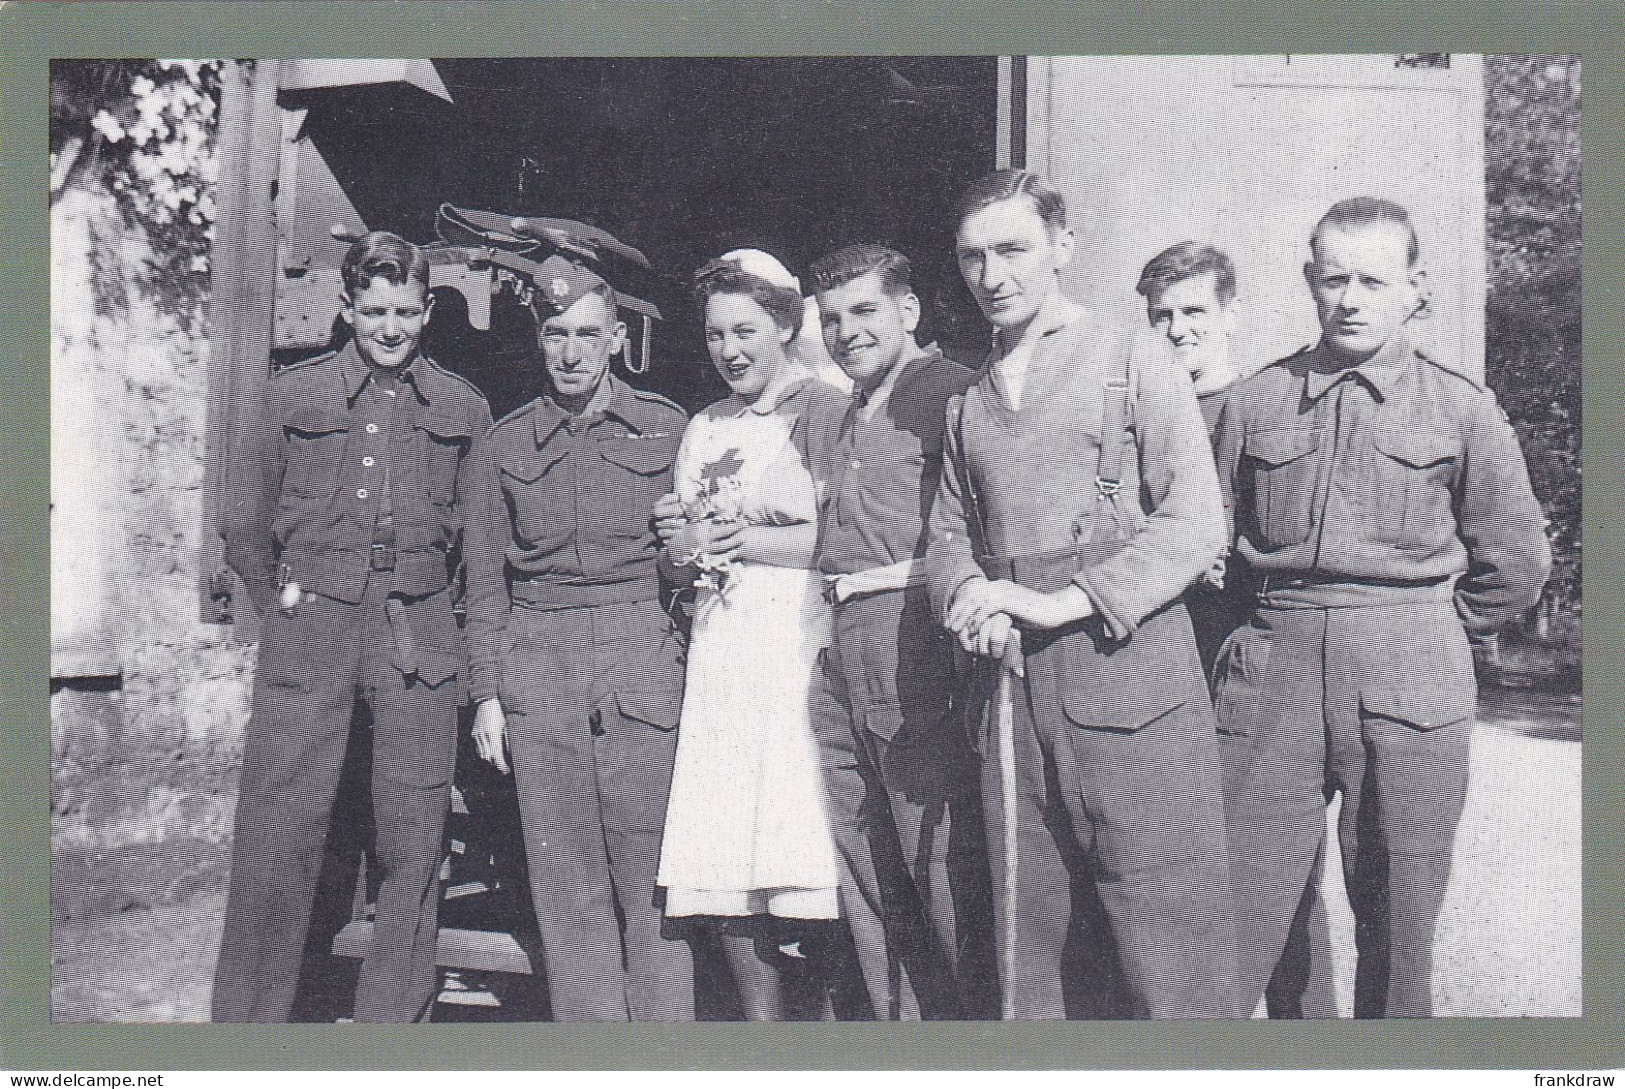 Nostalgia Postcard - Patients At Camp Reception, 1943 - VG - Unclassified